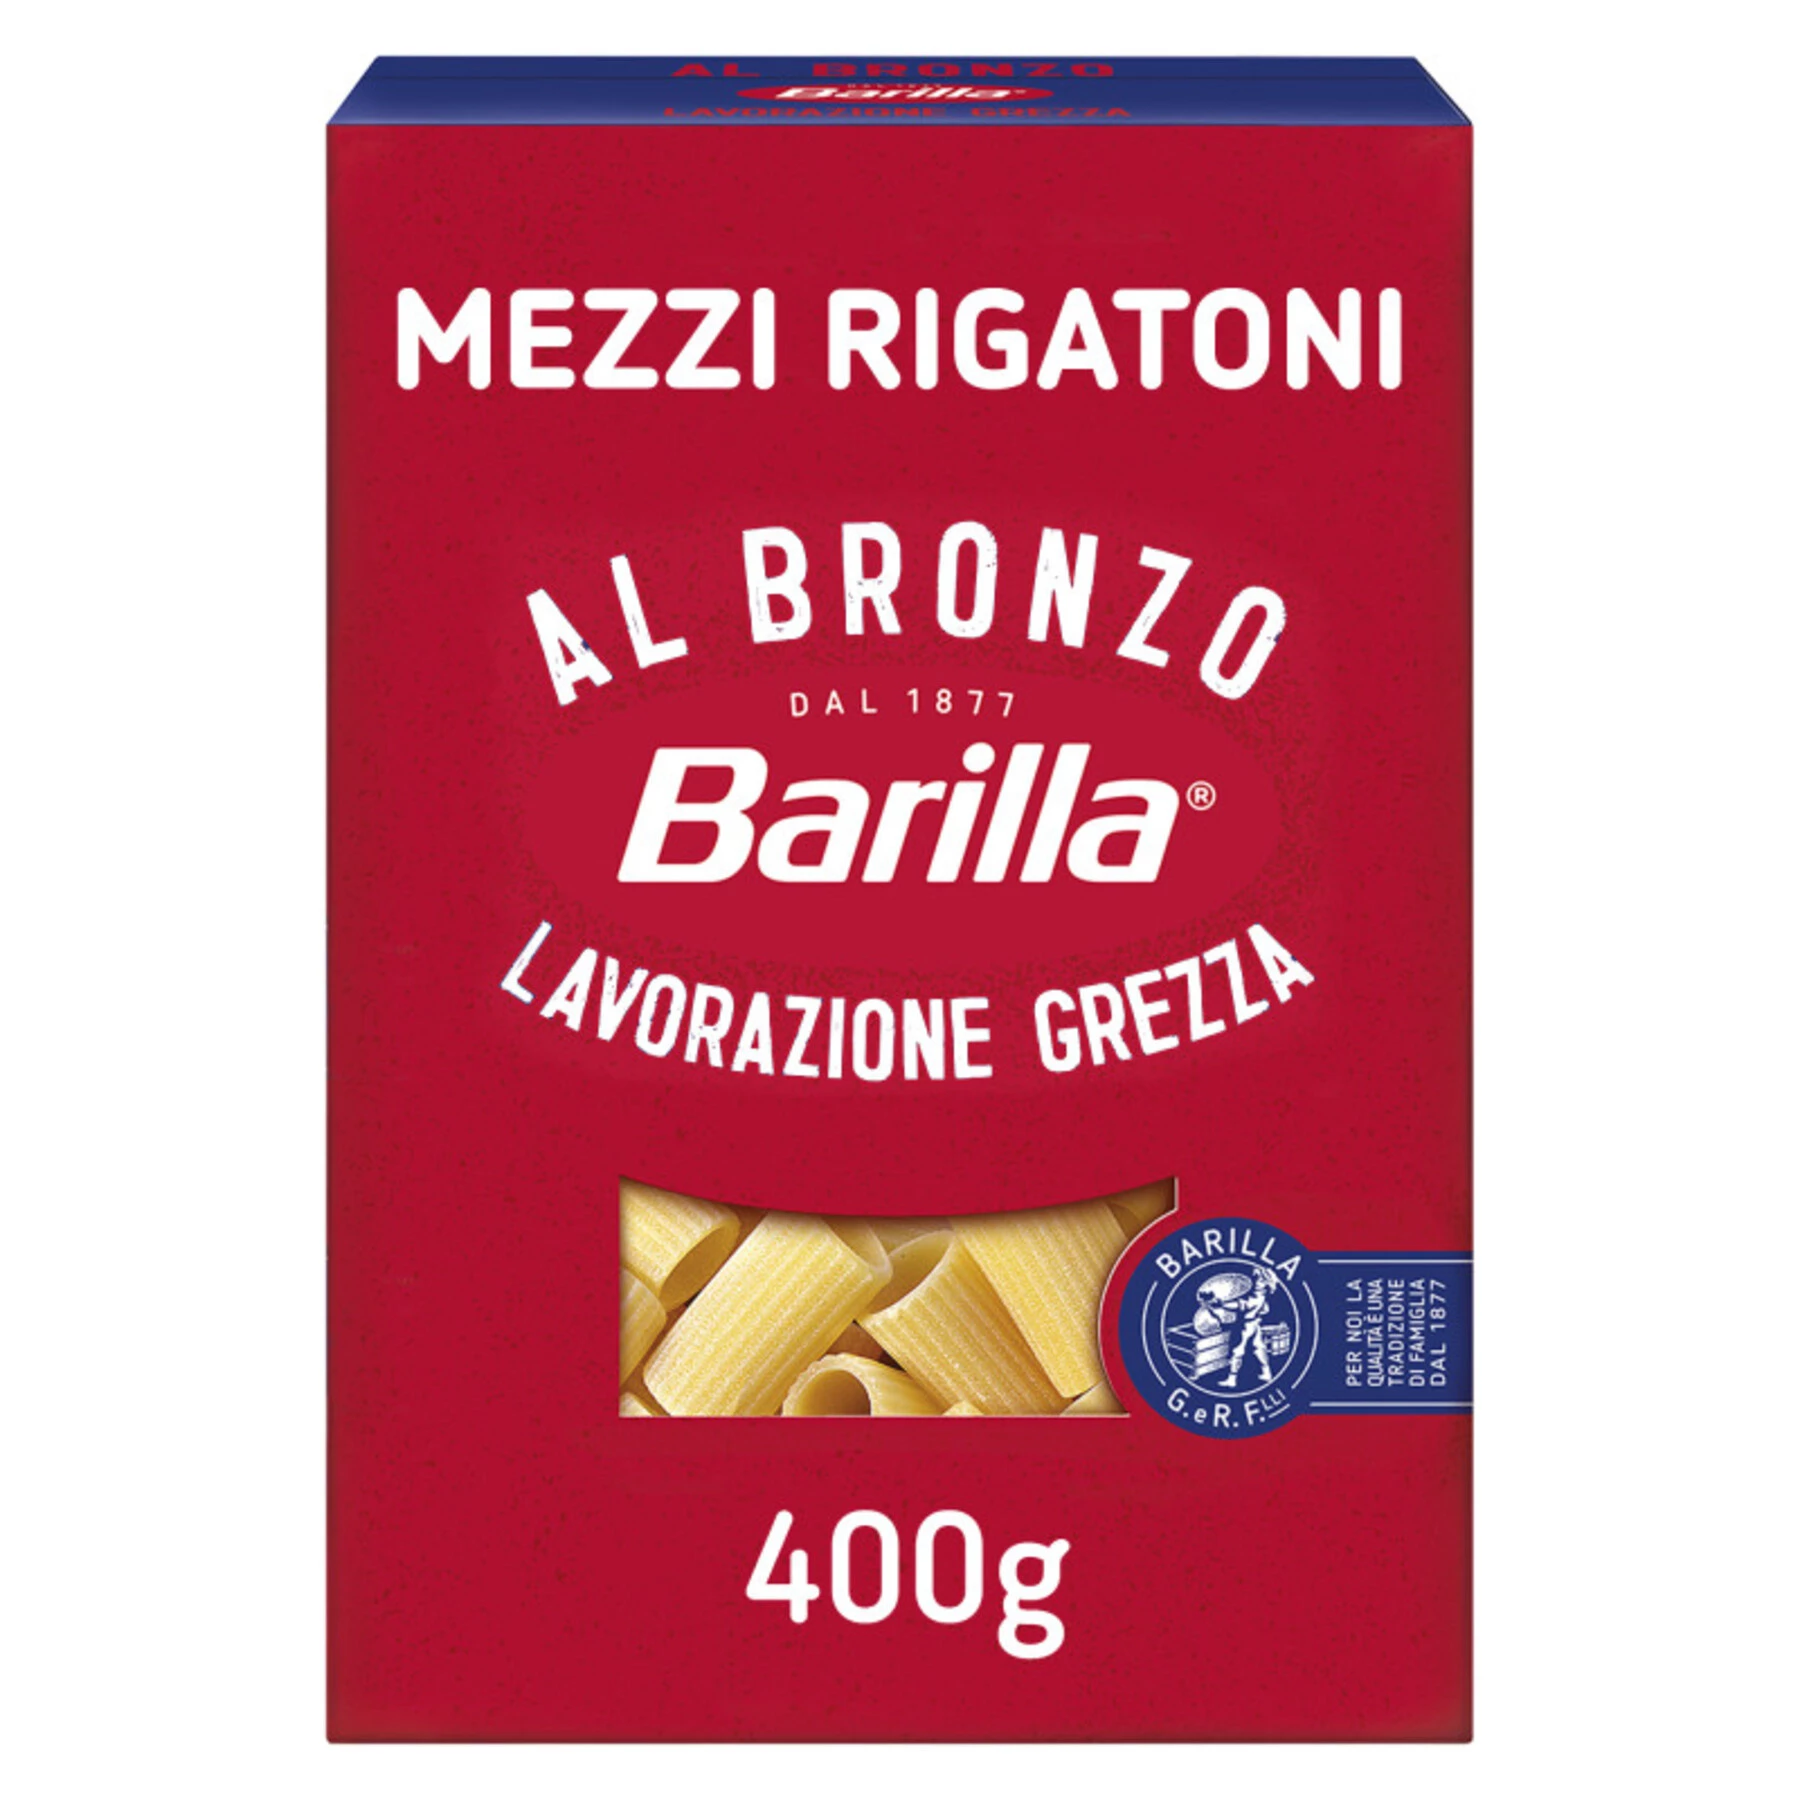 Patés de Bronce Mezzi Rigatoni, 400g - BARILLA